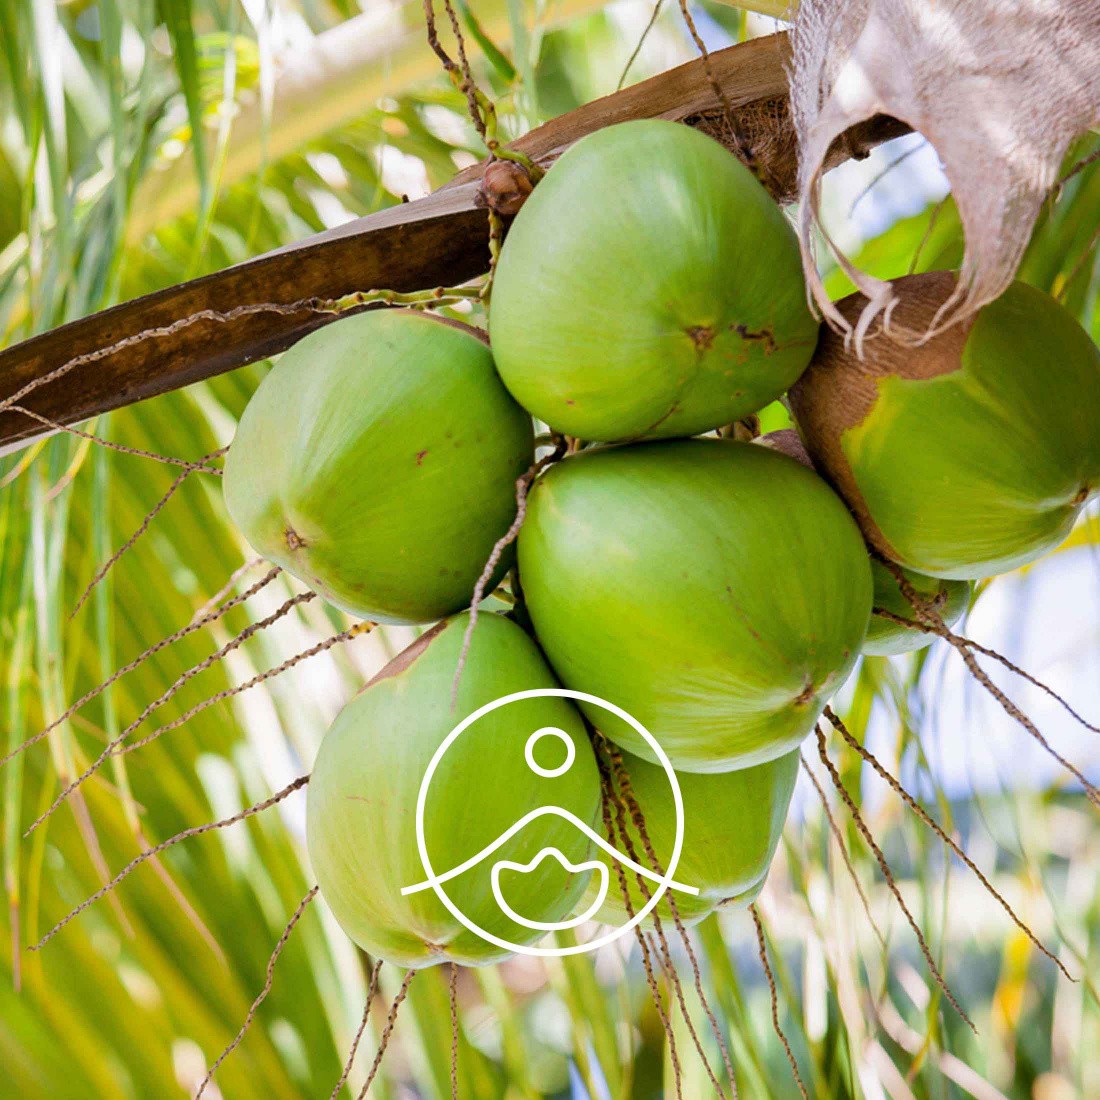 Huile de noix de coco désodorisée - Bio - 500 ml - Purasana